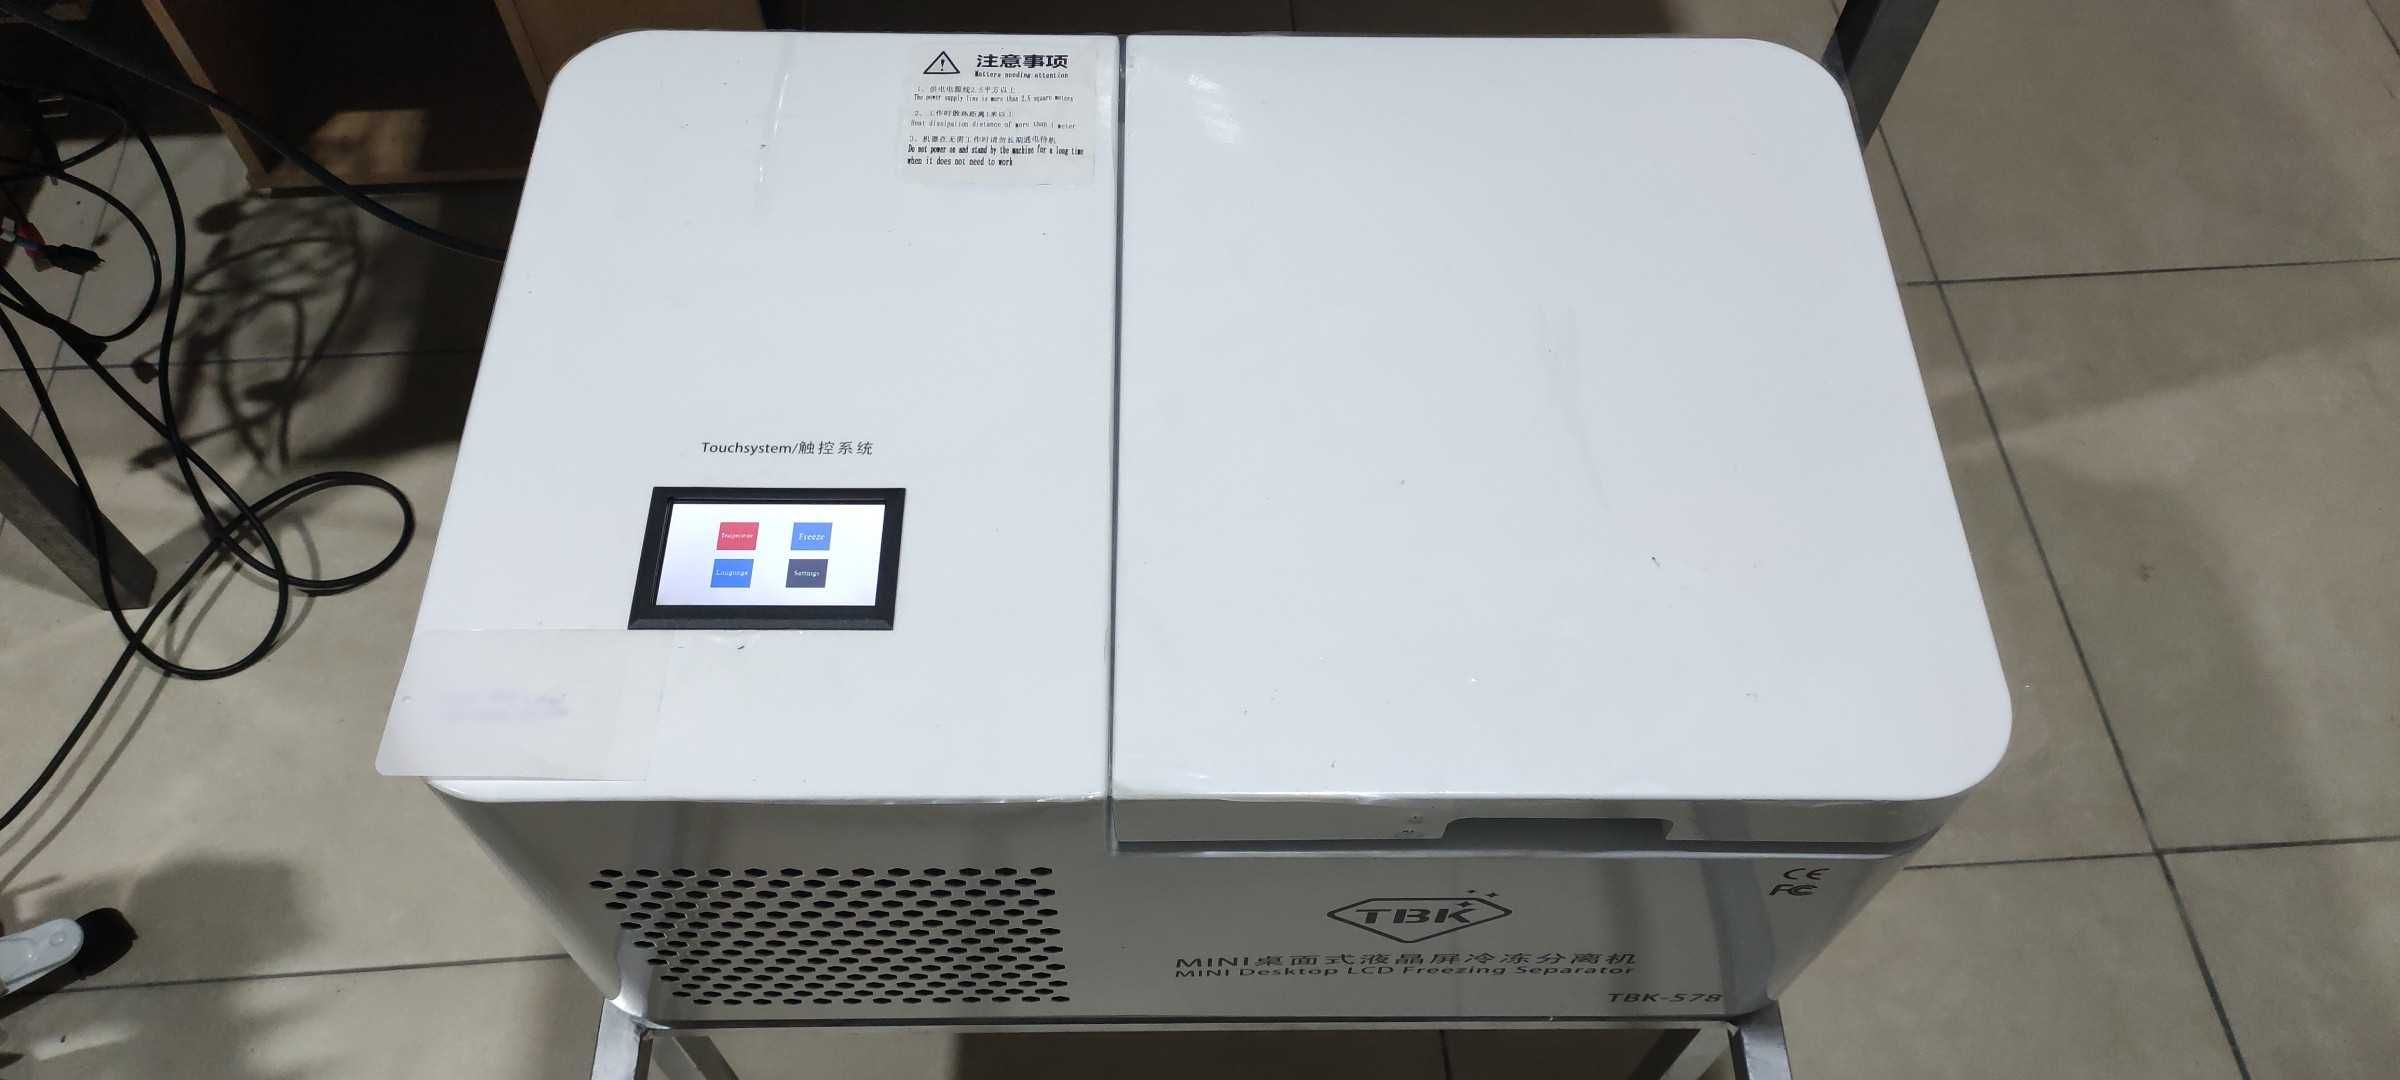 Maquina Mini Desktop LCD Freezing Separator TBK-578